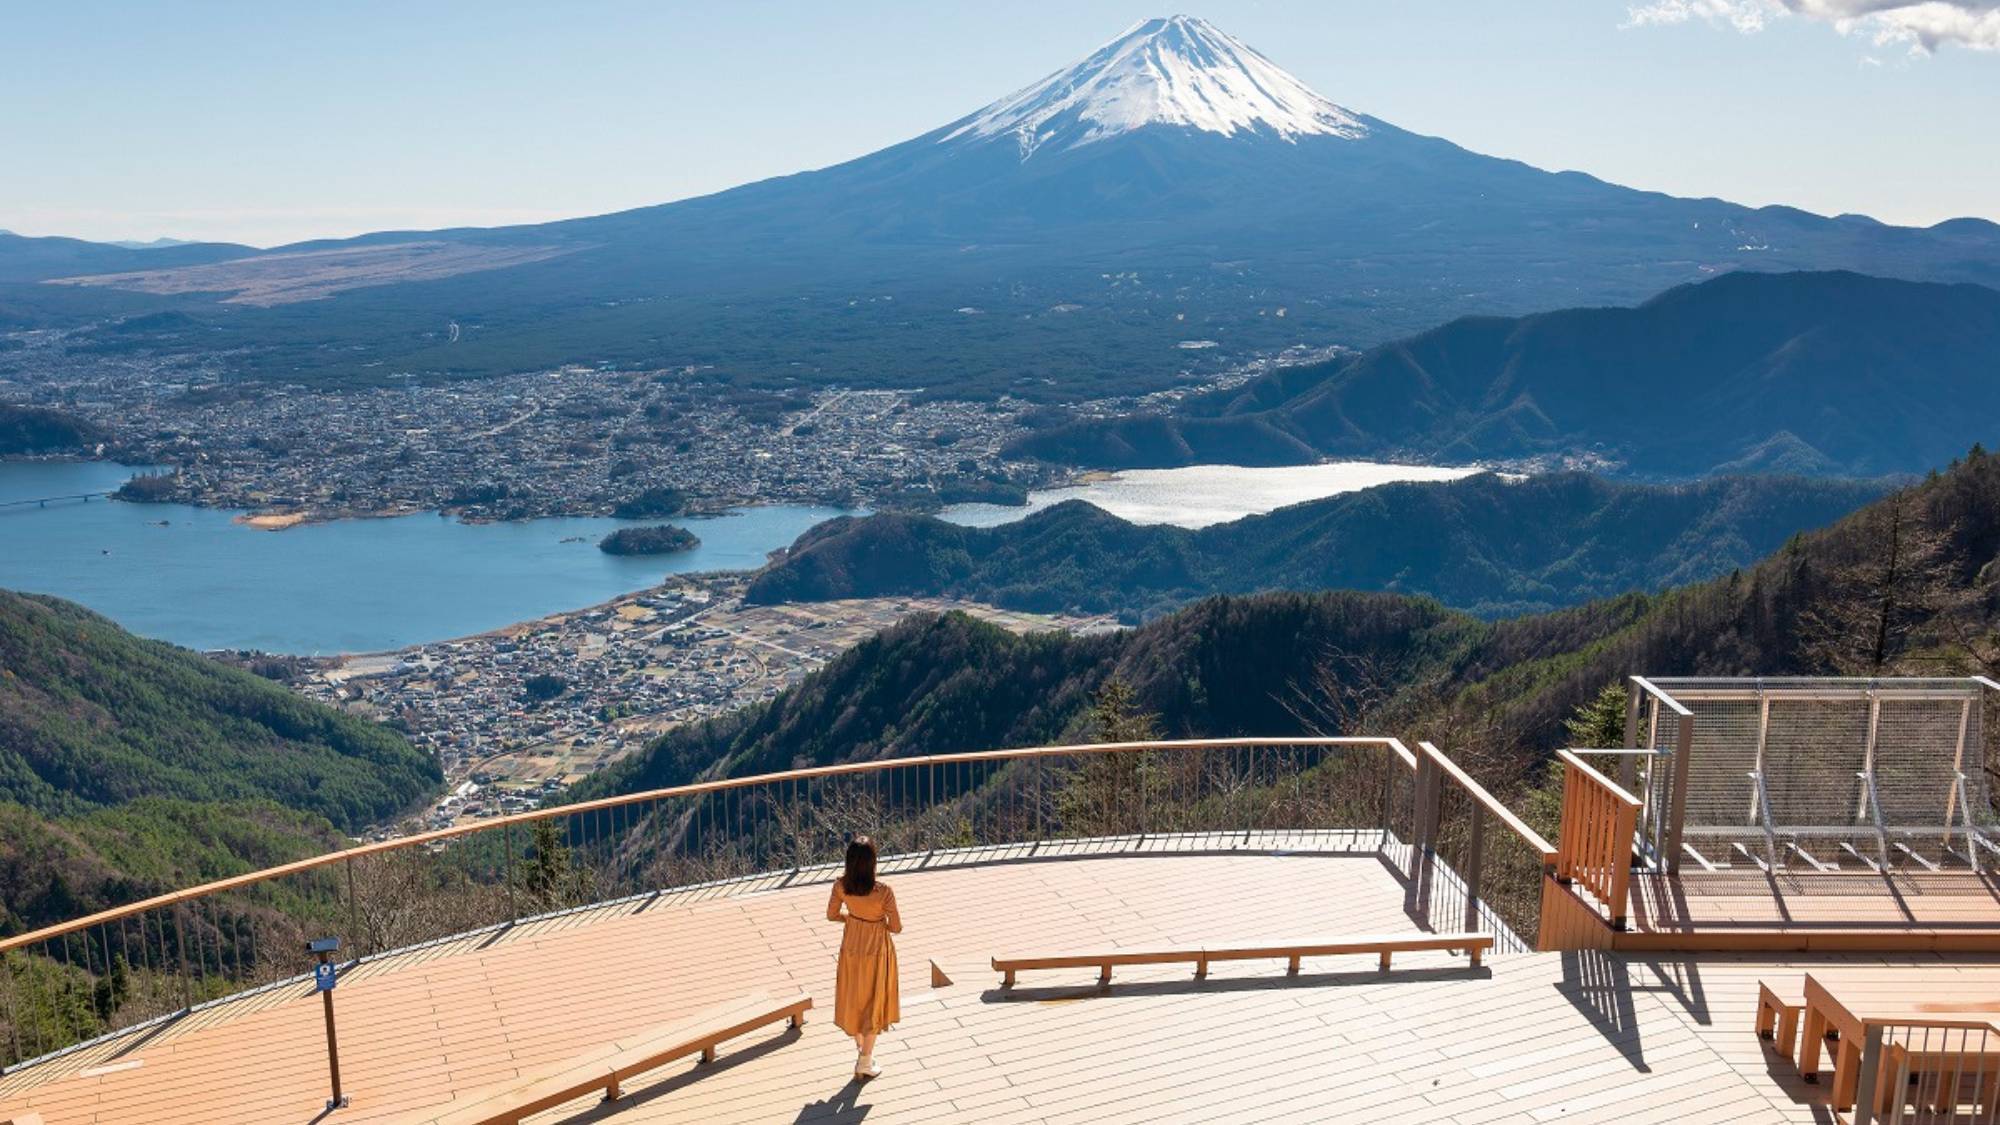 【FUJIYAMAツインテラス】季節、気候、時間により様々な富士山の姿を眺めることができます